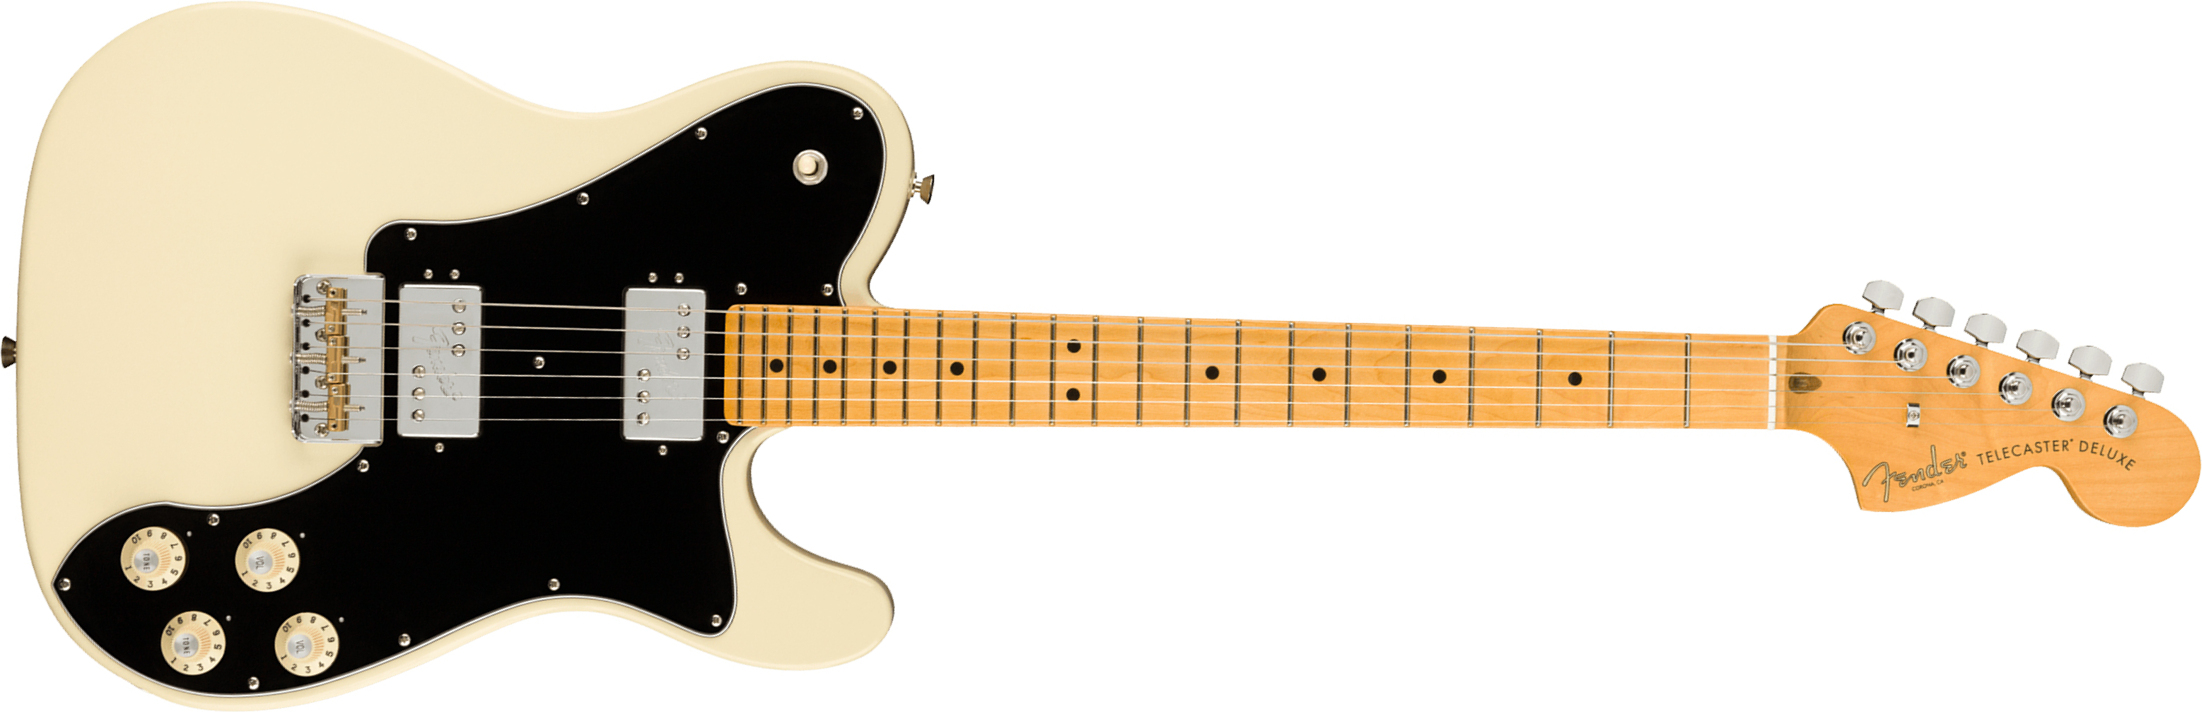 Fender Tele Deluxe American Professional Ii Usa Mn - Olympic White - Televorm elektrische gitaar - Main picture